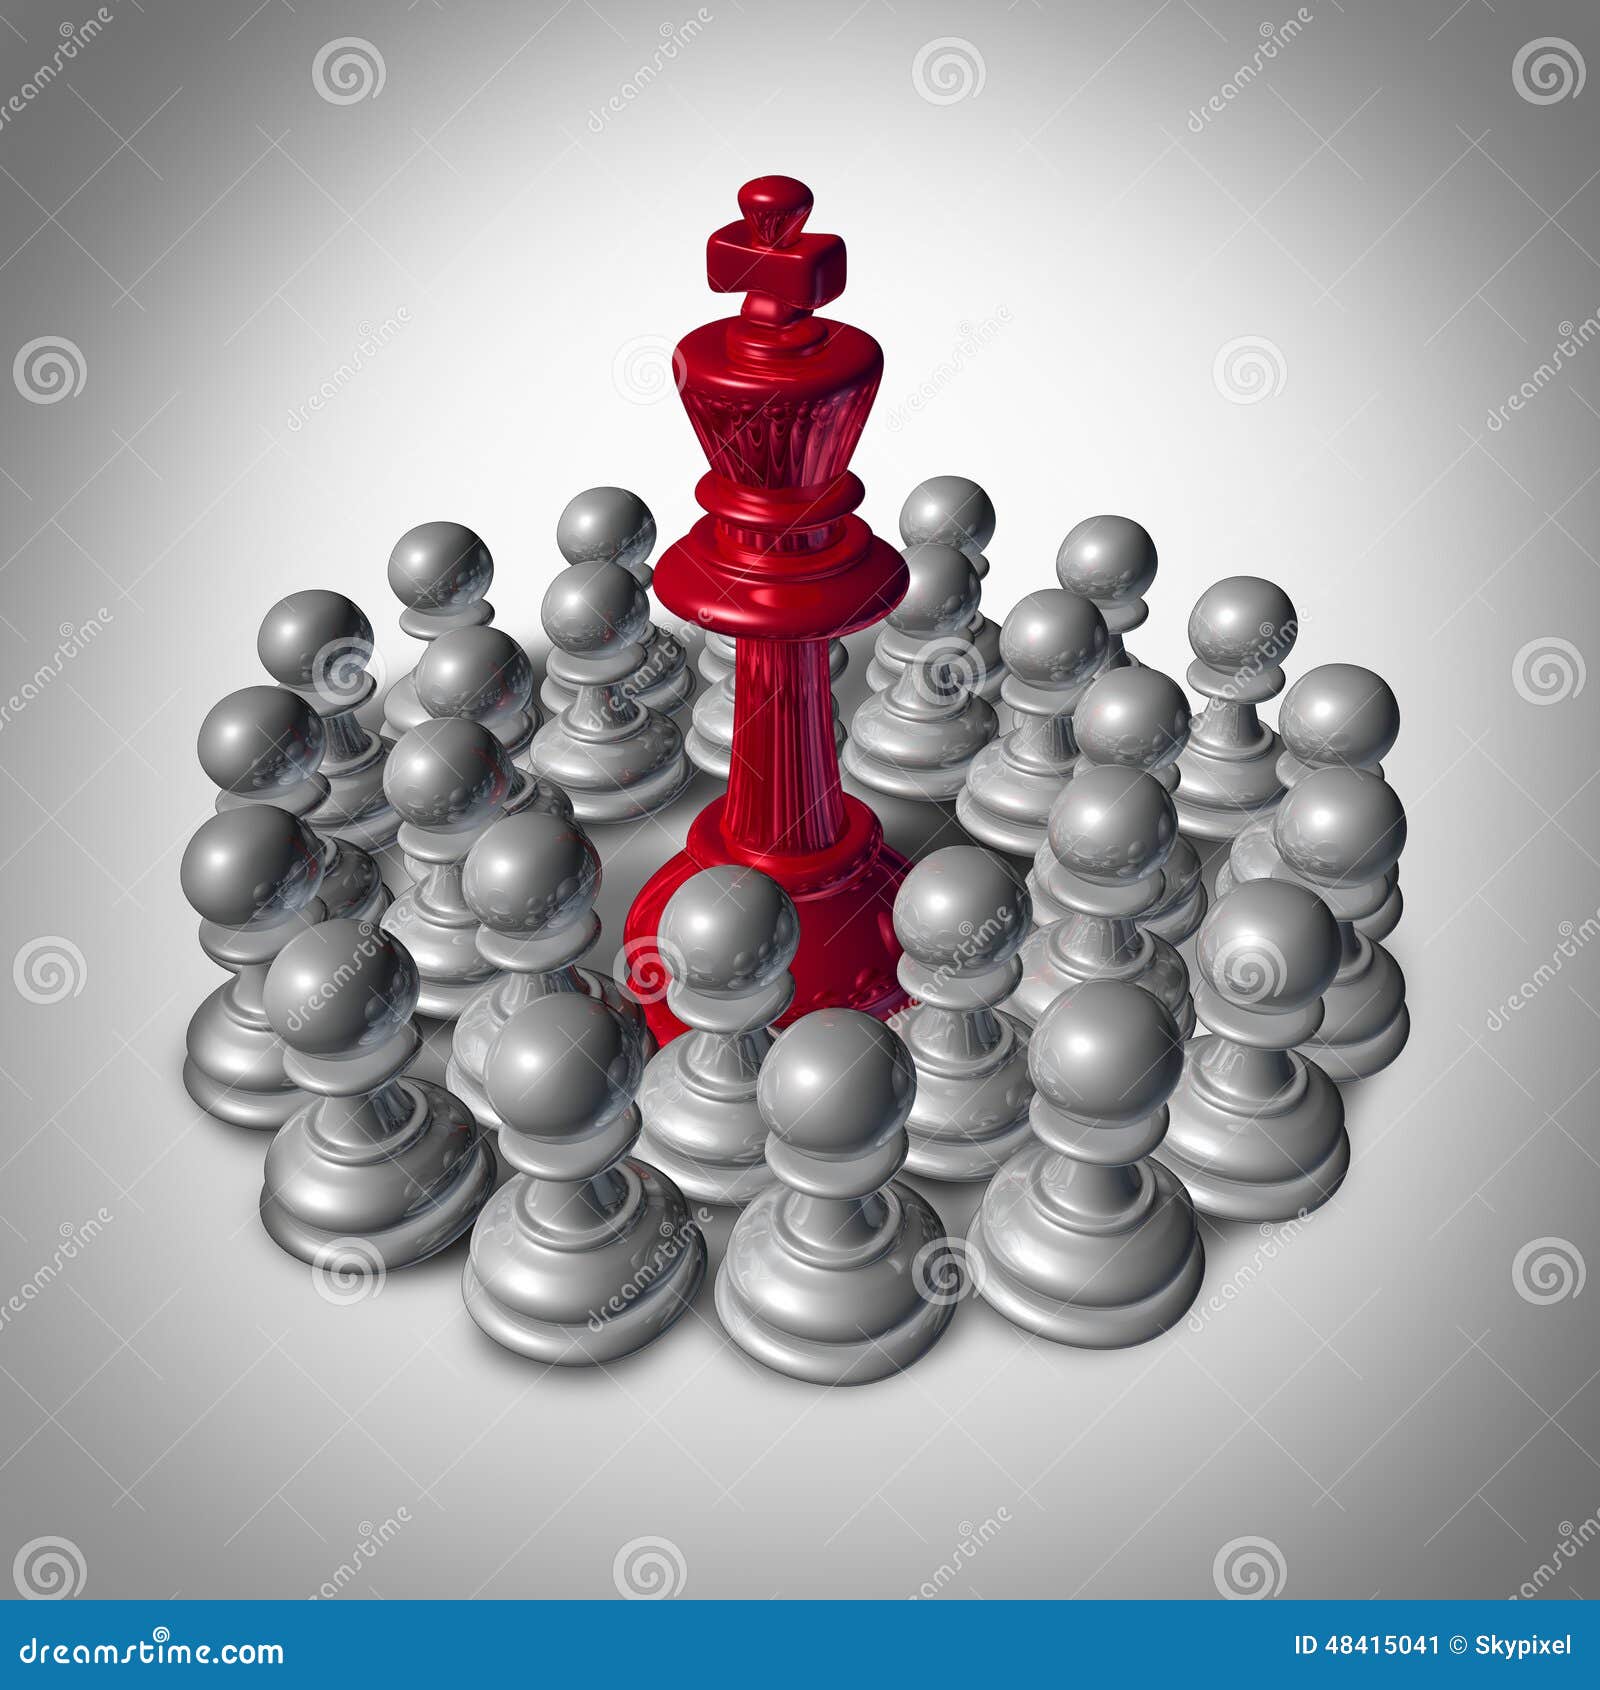 Checkmate stock illustration. Illustration of strength - 48415041